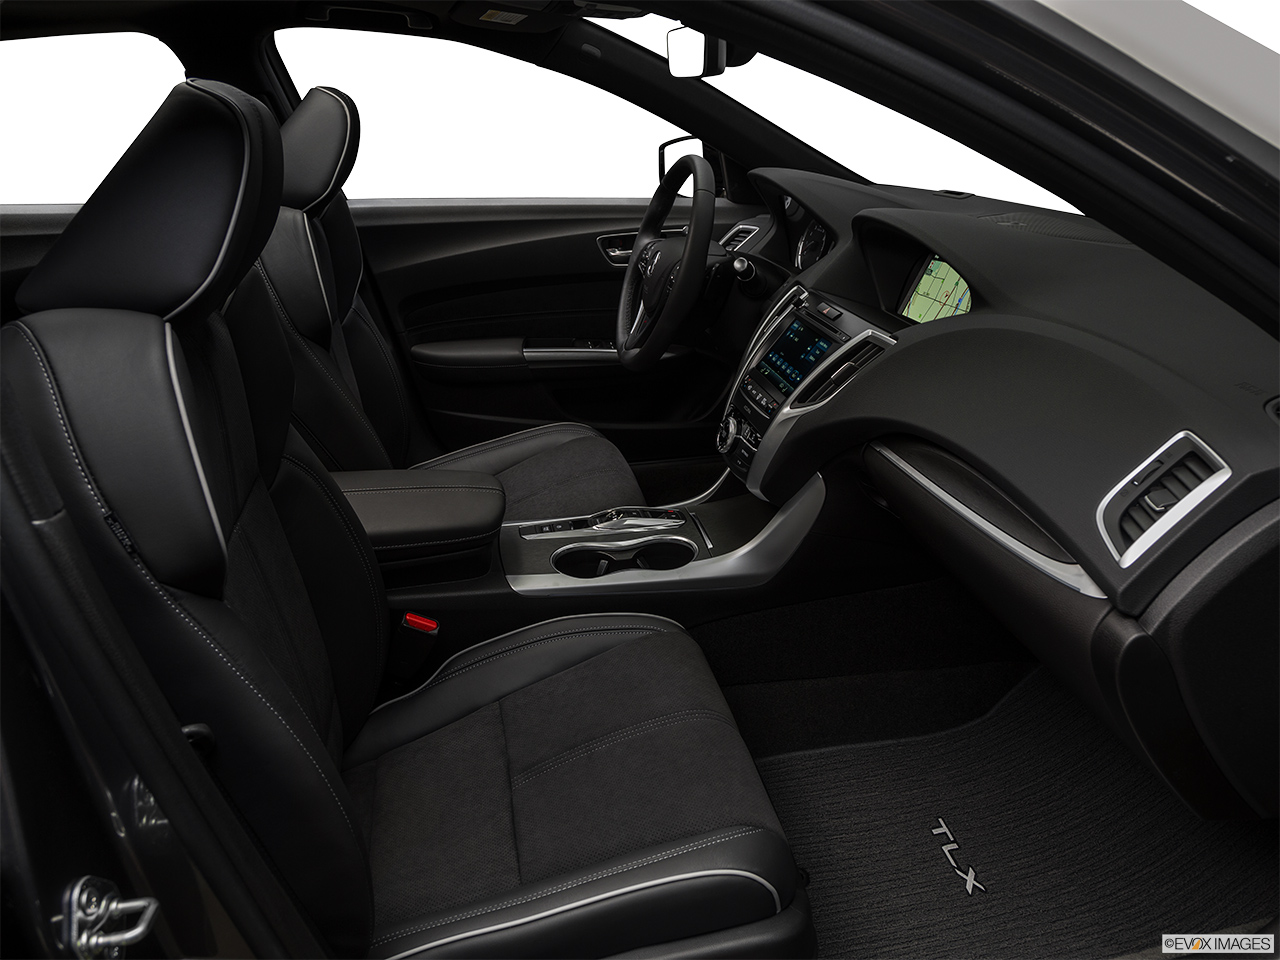 2019 Acura TLX 3.5L Passenger seat. 